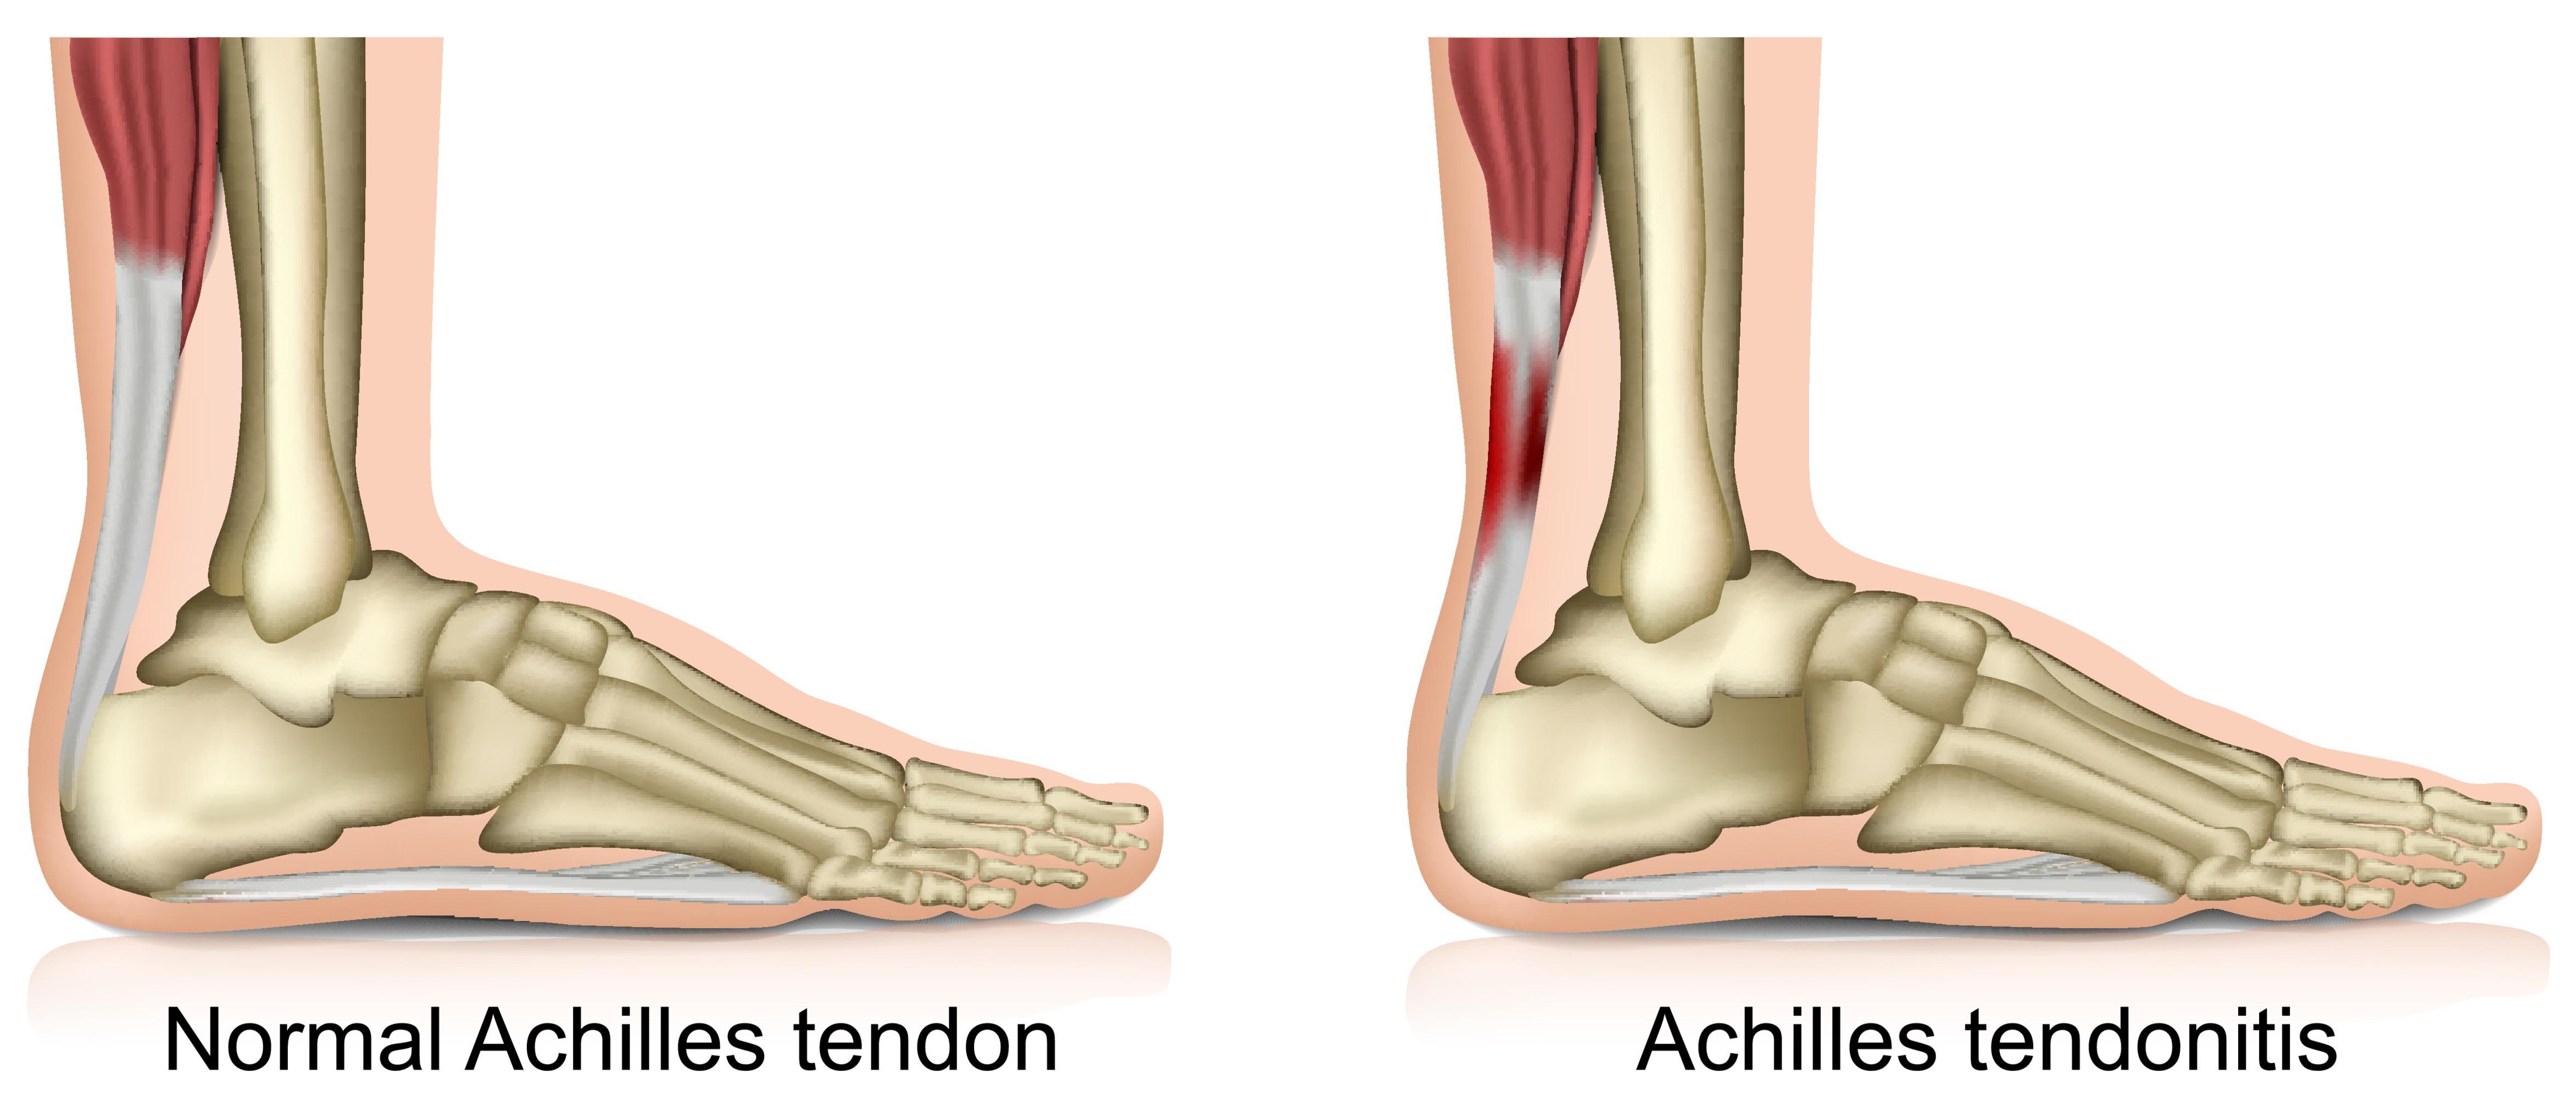 sudden shooting pain in achilles tendon